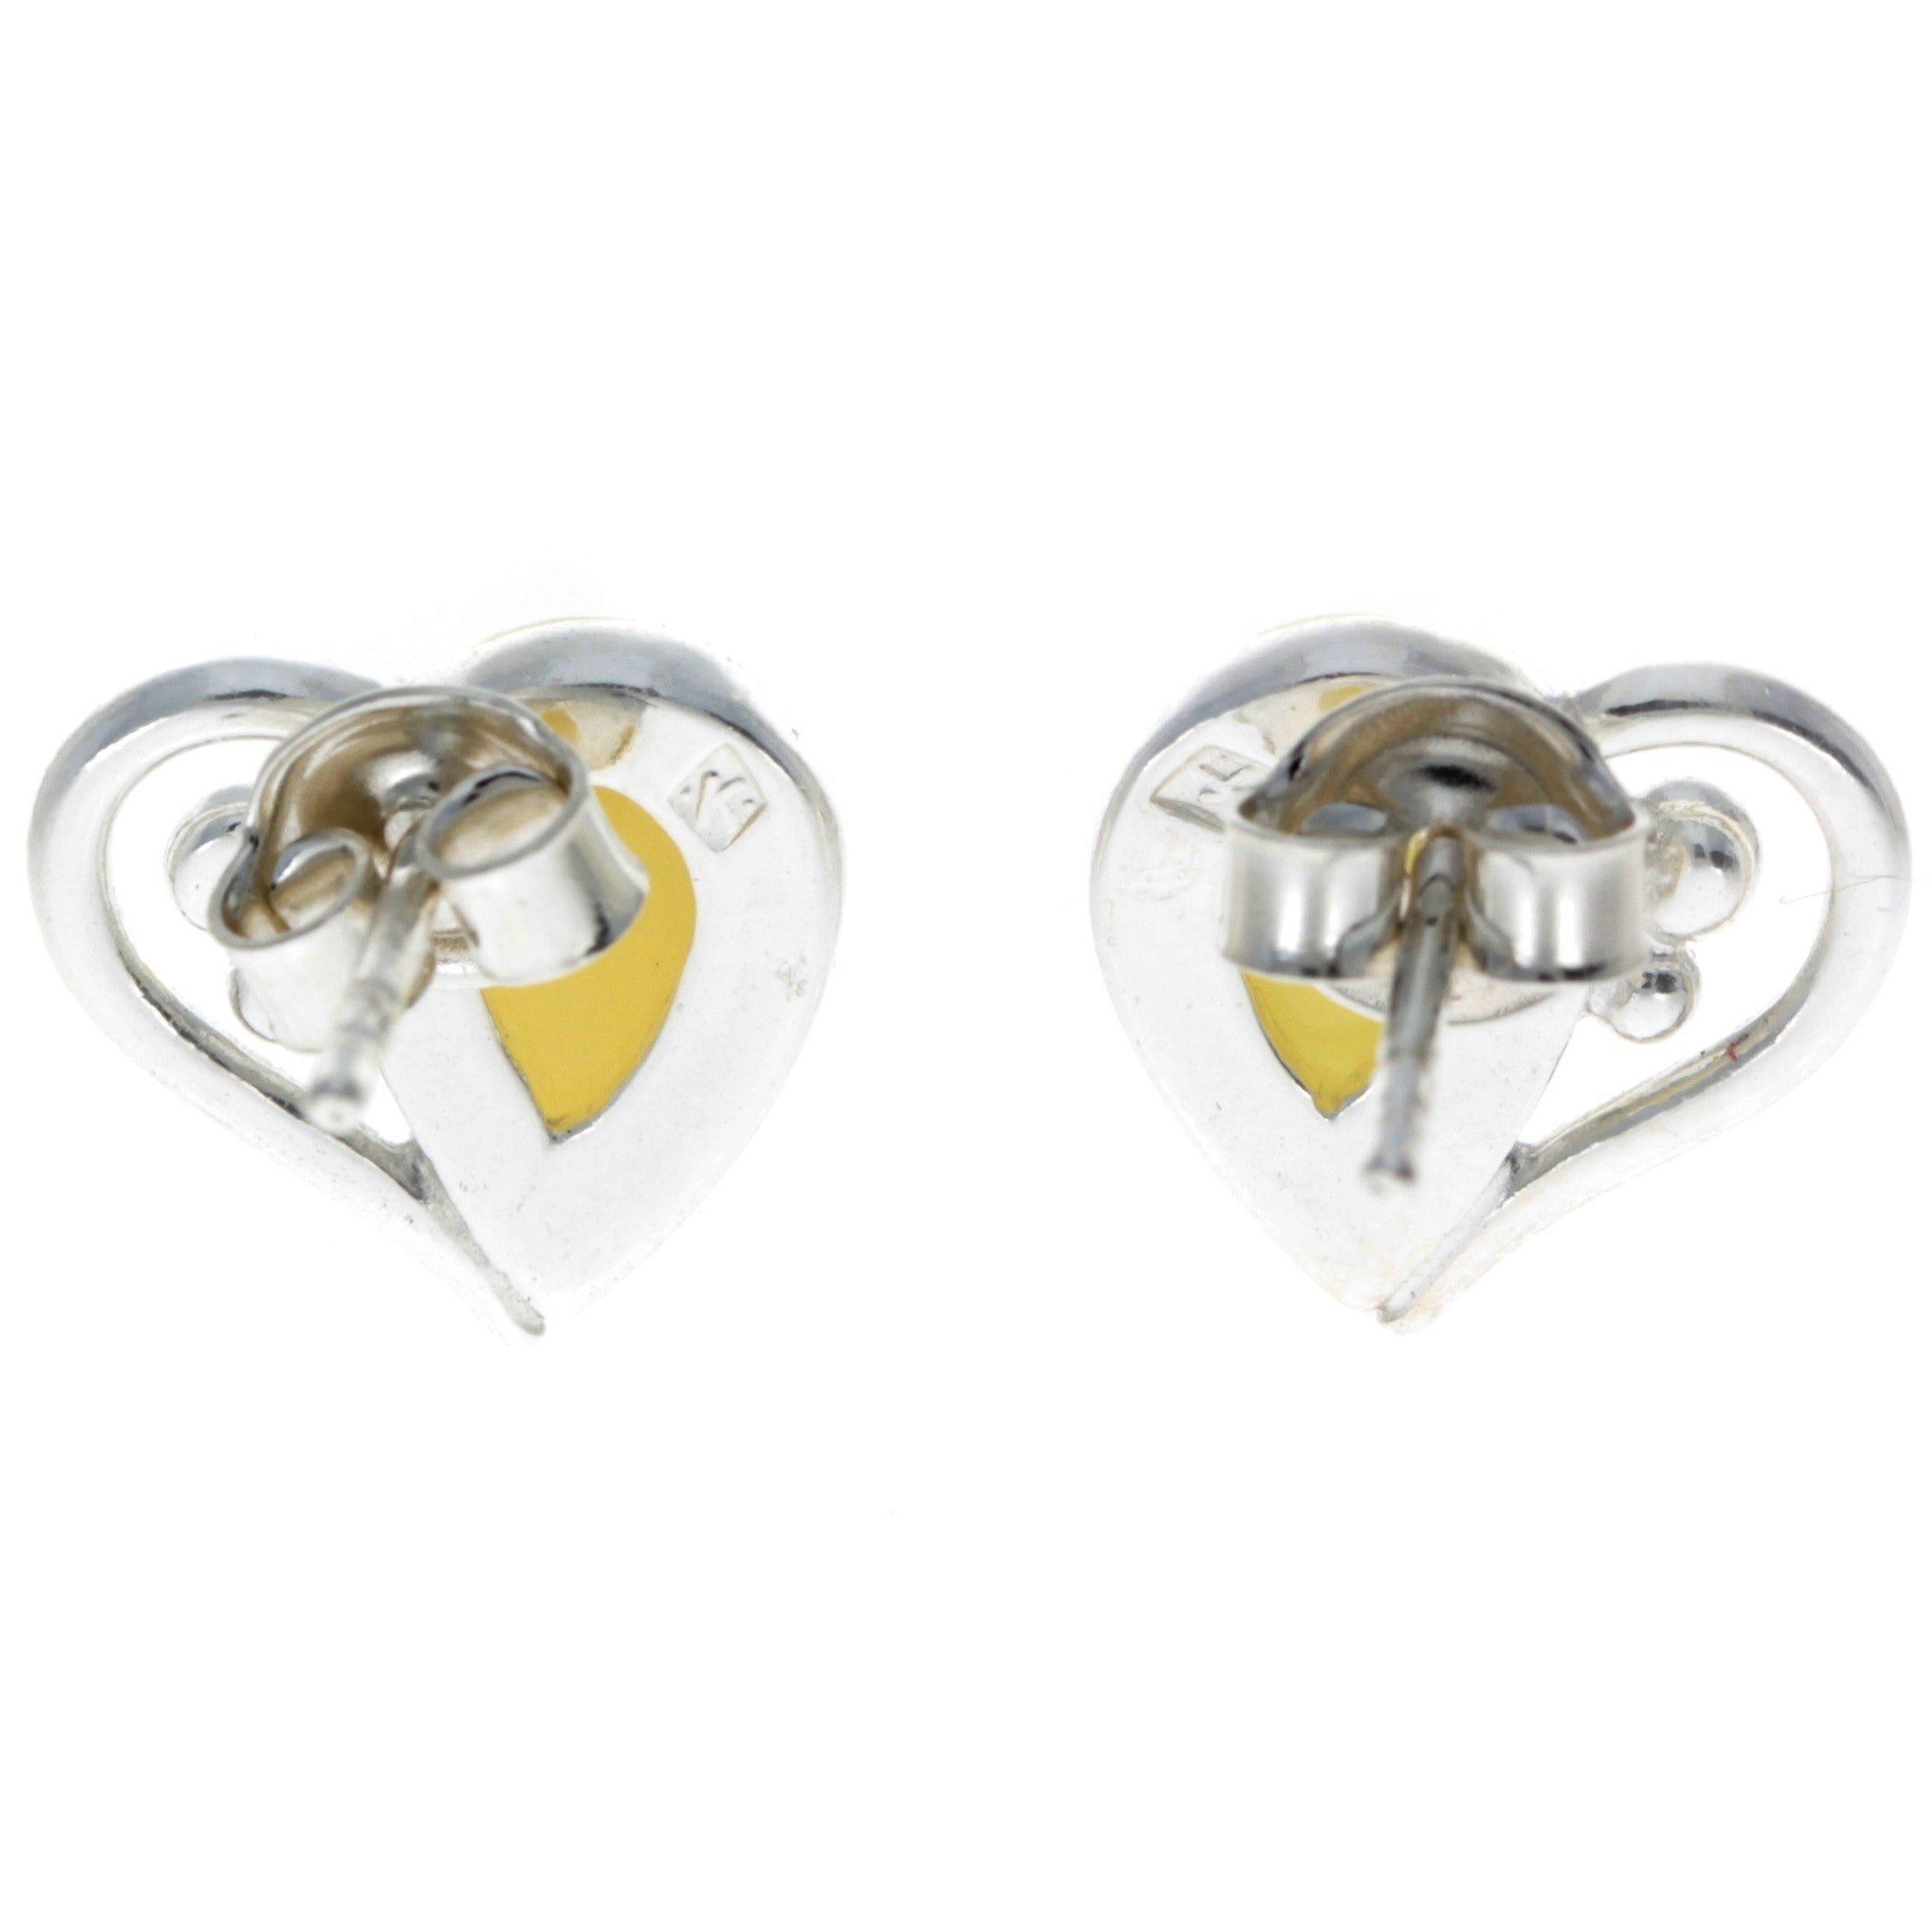 925 Sterling Silver & Baltic Amber Heart Studs Earrings - M194